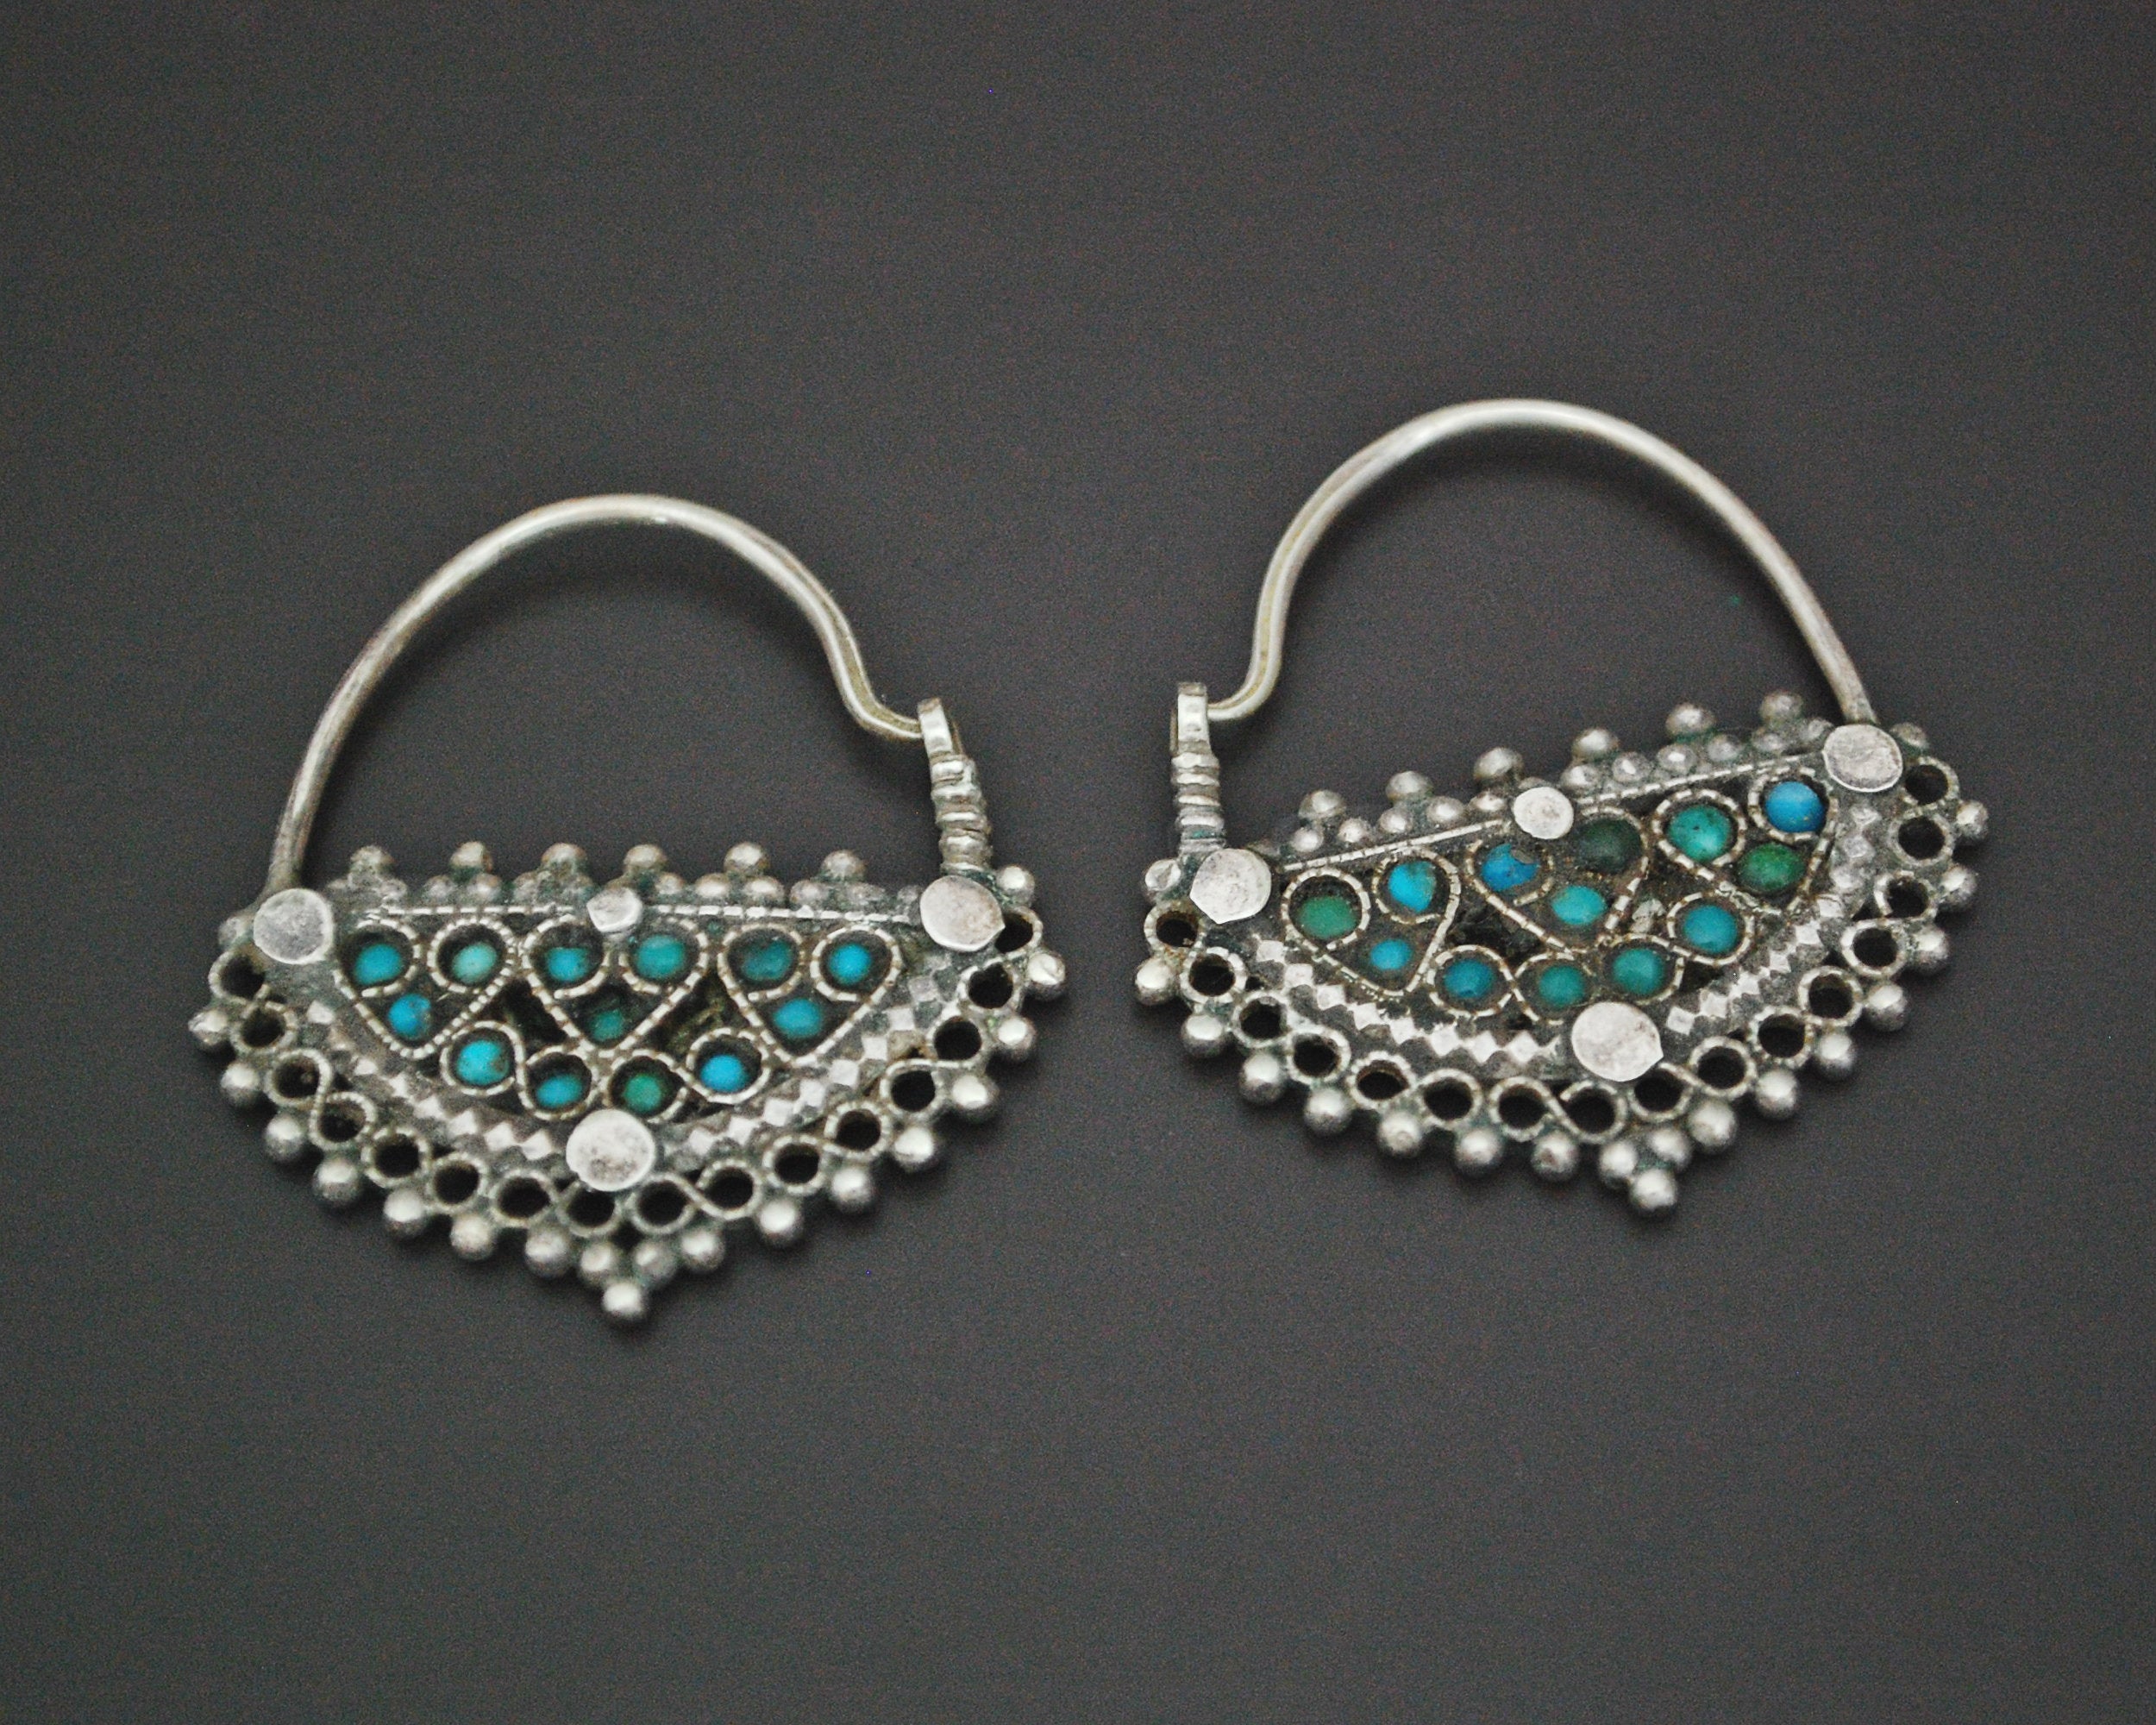 Afghani Hoop Earrings with Turquoise